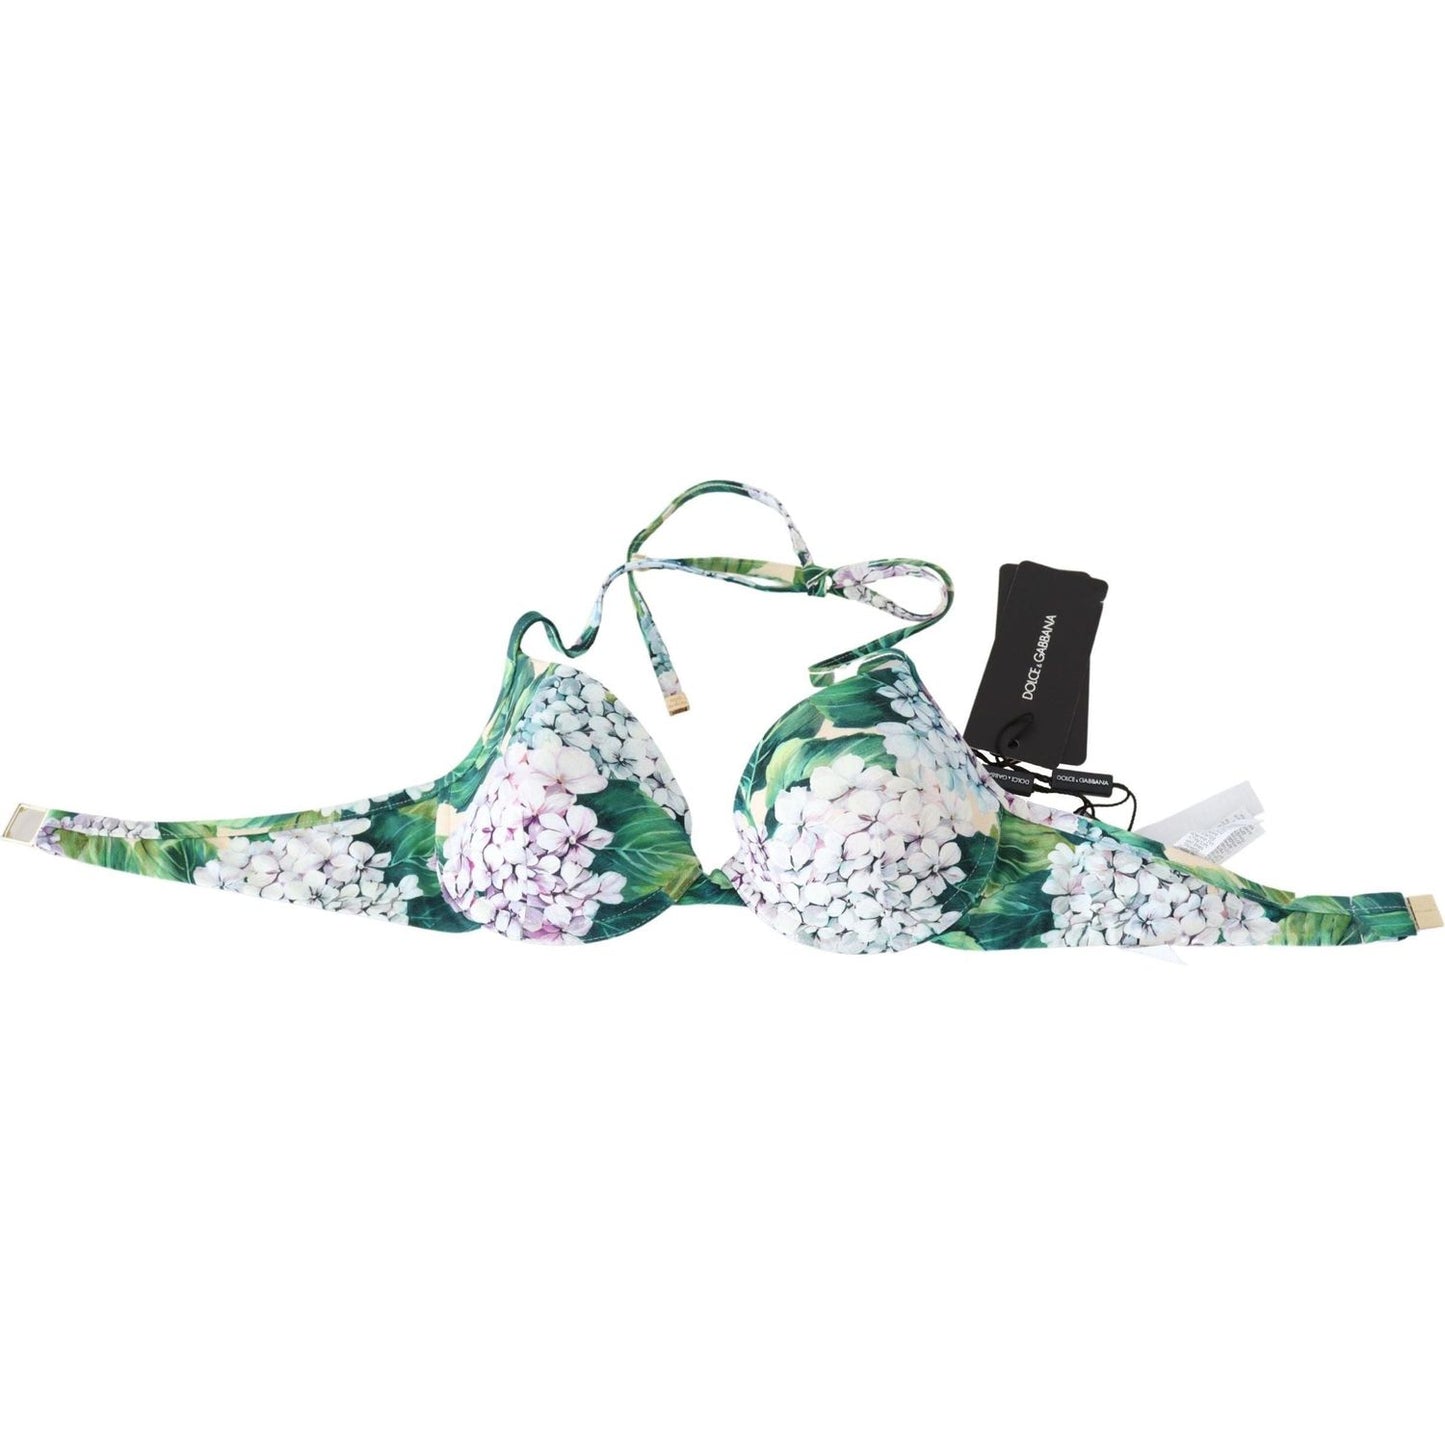 Dolce & Gabbana Chic Floral Bikini Top - Summer Swimwear Delight multicolor-floral-print-beachwear-bikini-tops-1